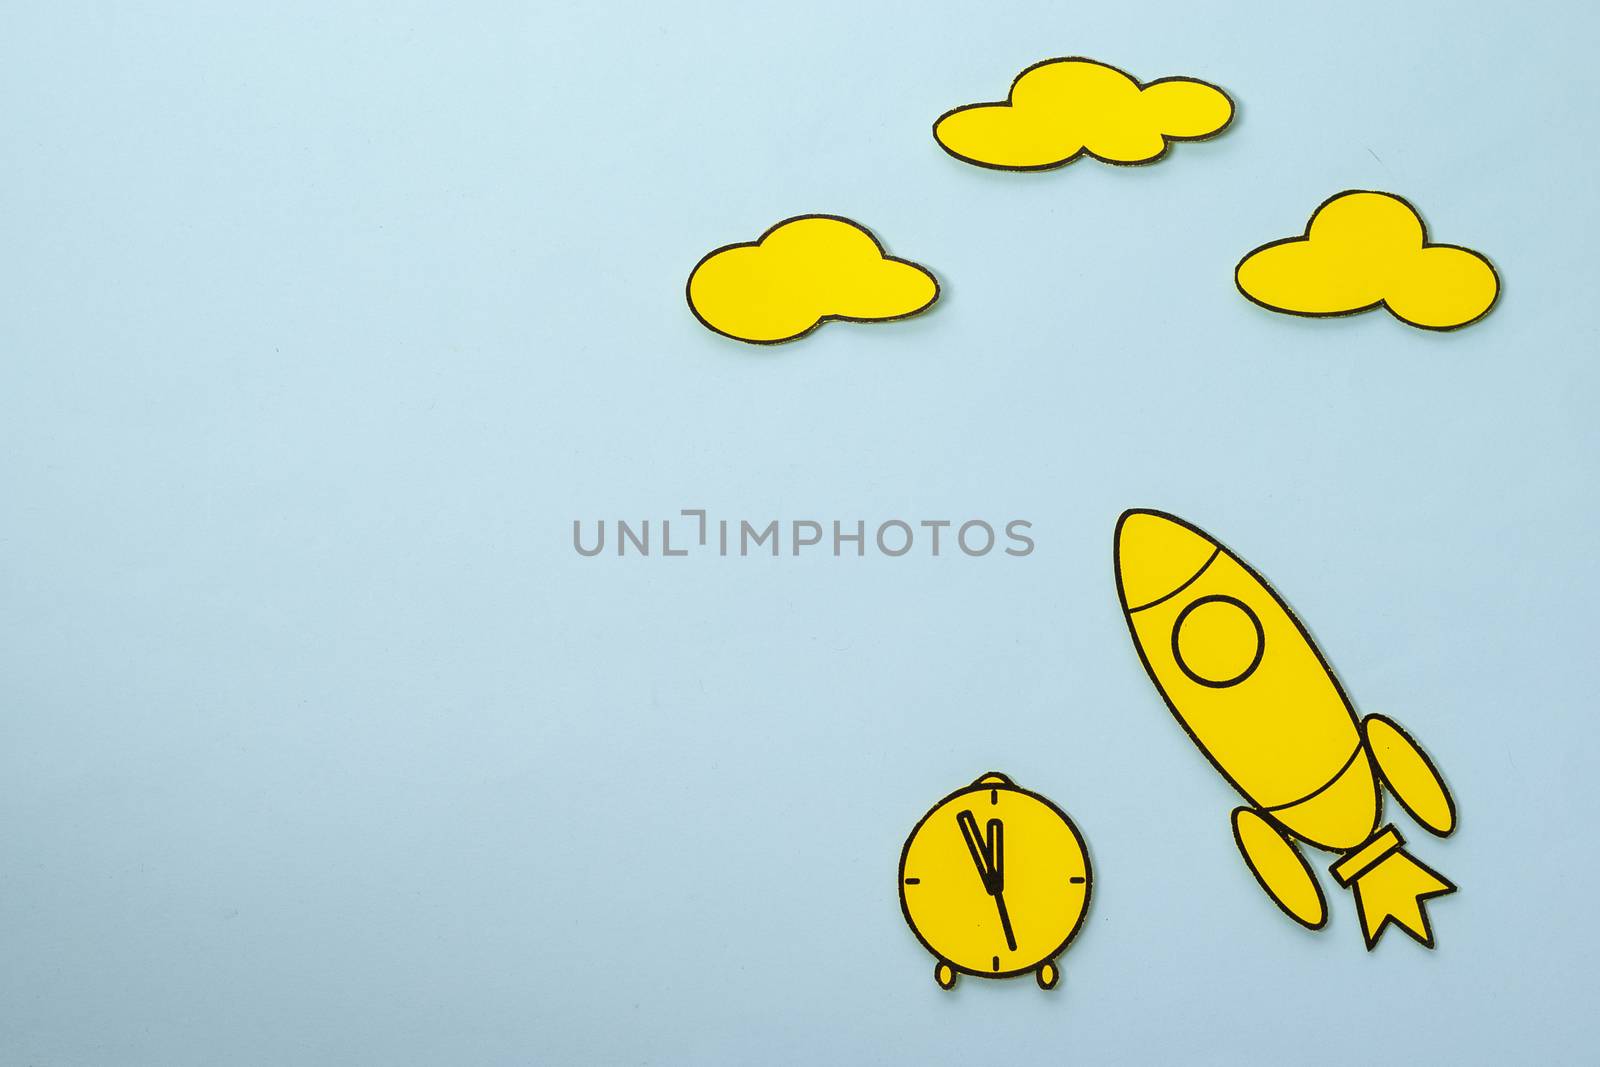 Little yellow rocket speeding through space blue sky background by sergii_gnatiuk